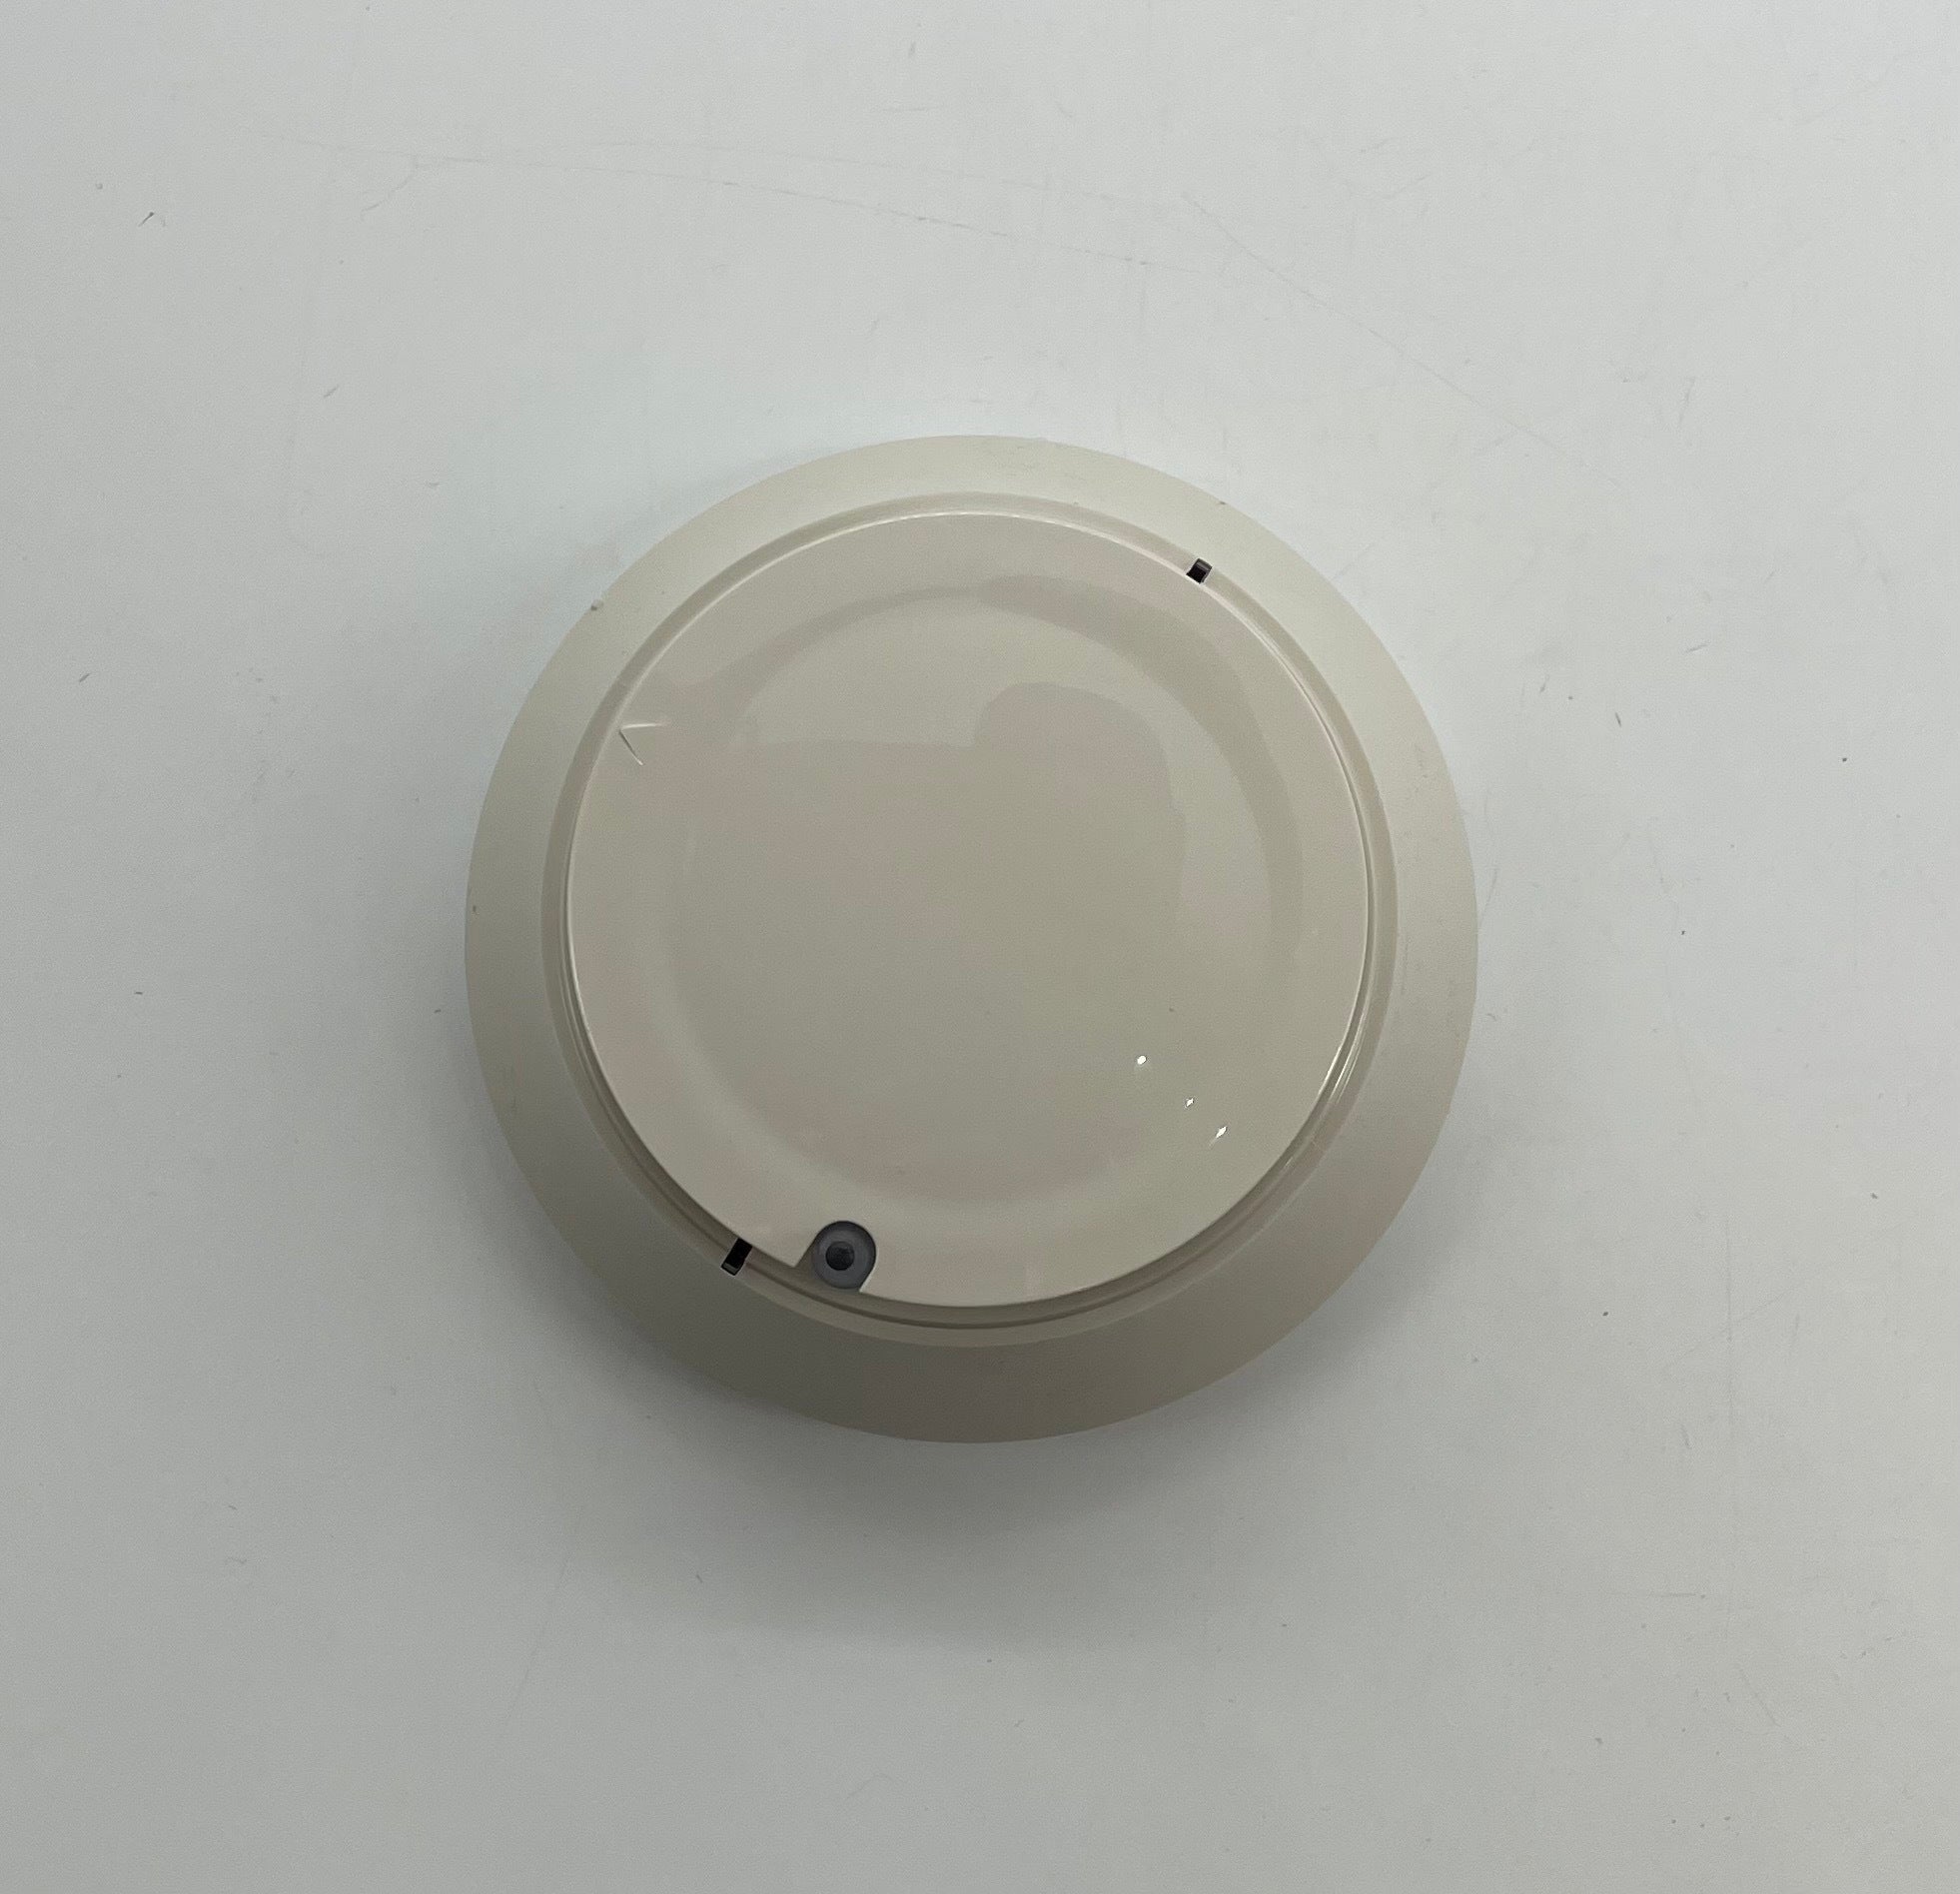 Firelite SD365CO-IV - The Fire Alarm Supplier